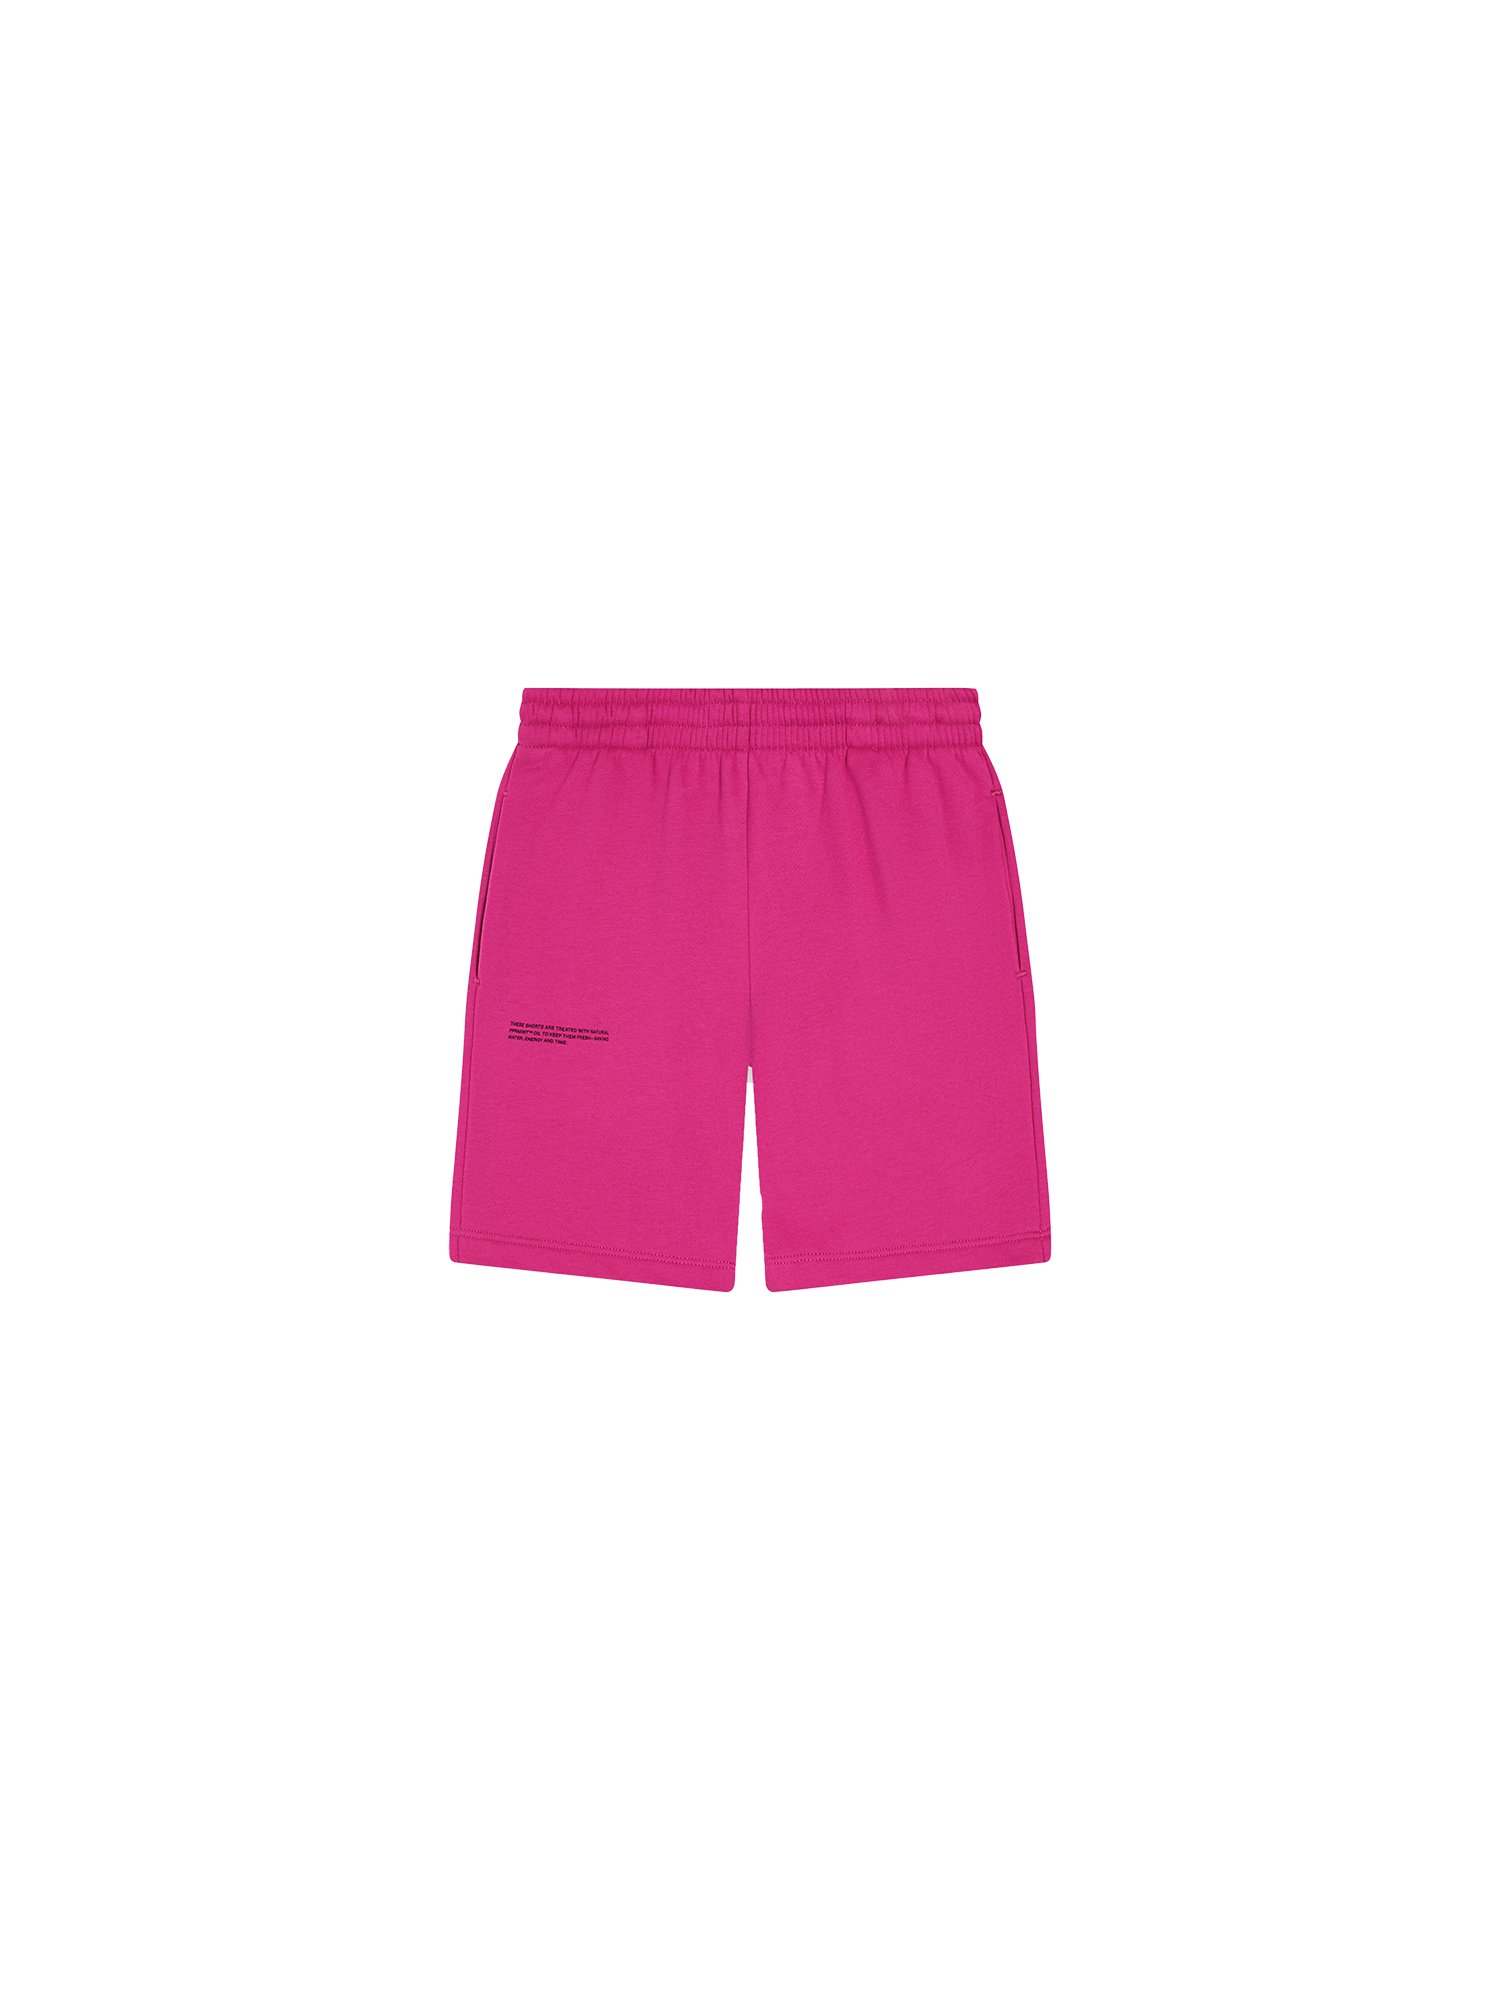 Kids 365 Long Shorts AW21—foxglove pink-packshot-3